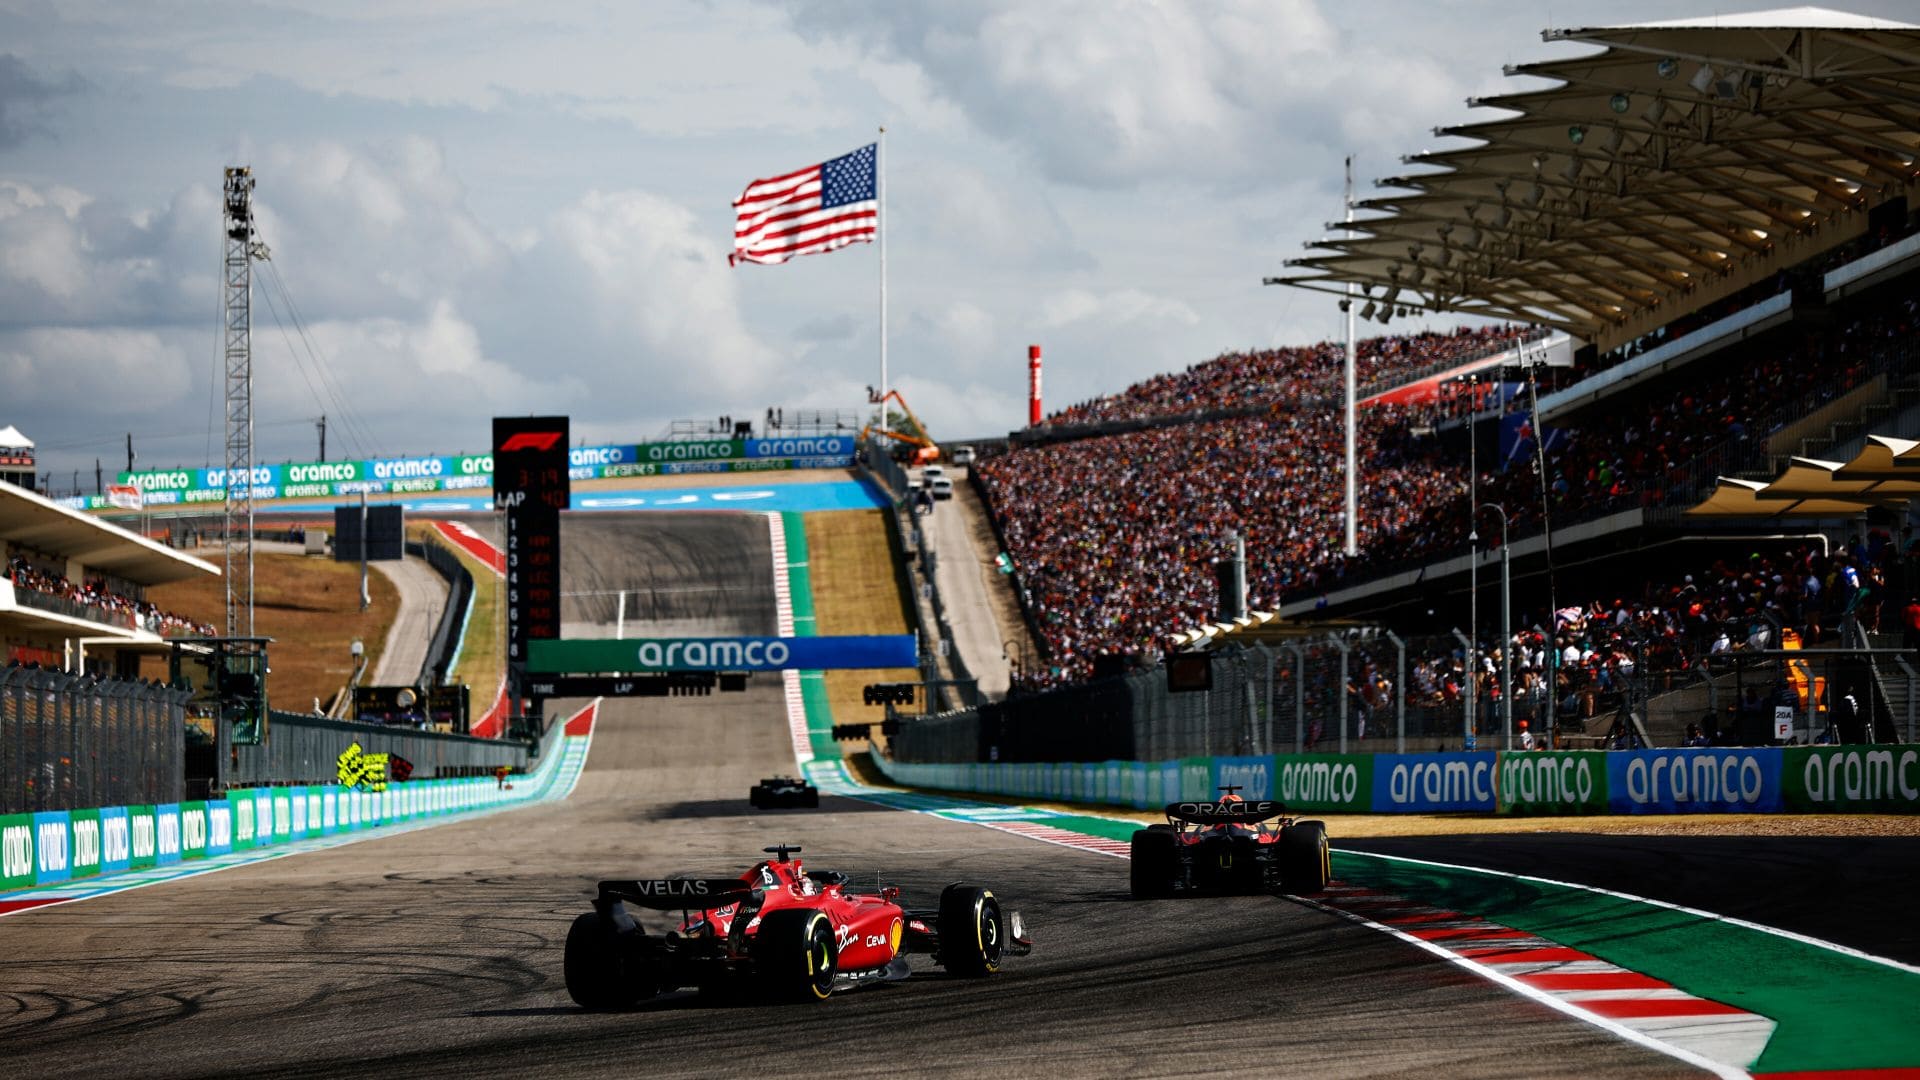 F1 22 Celebrates the United States Grand Prix with Free Content